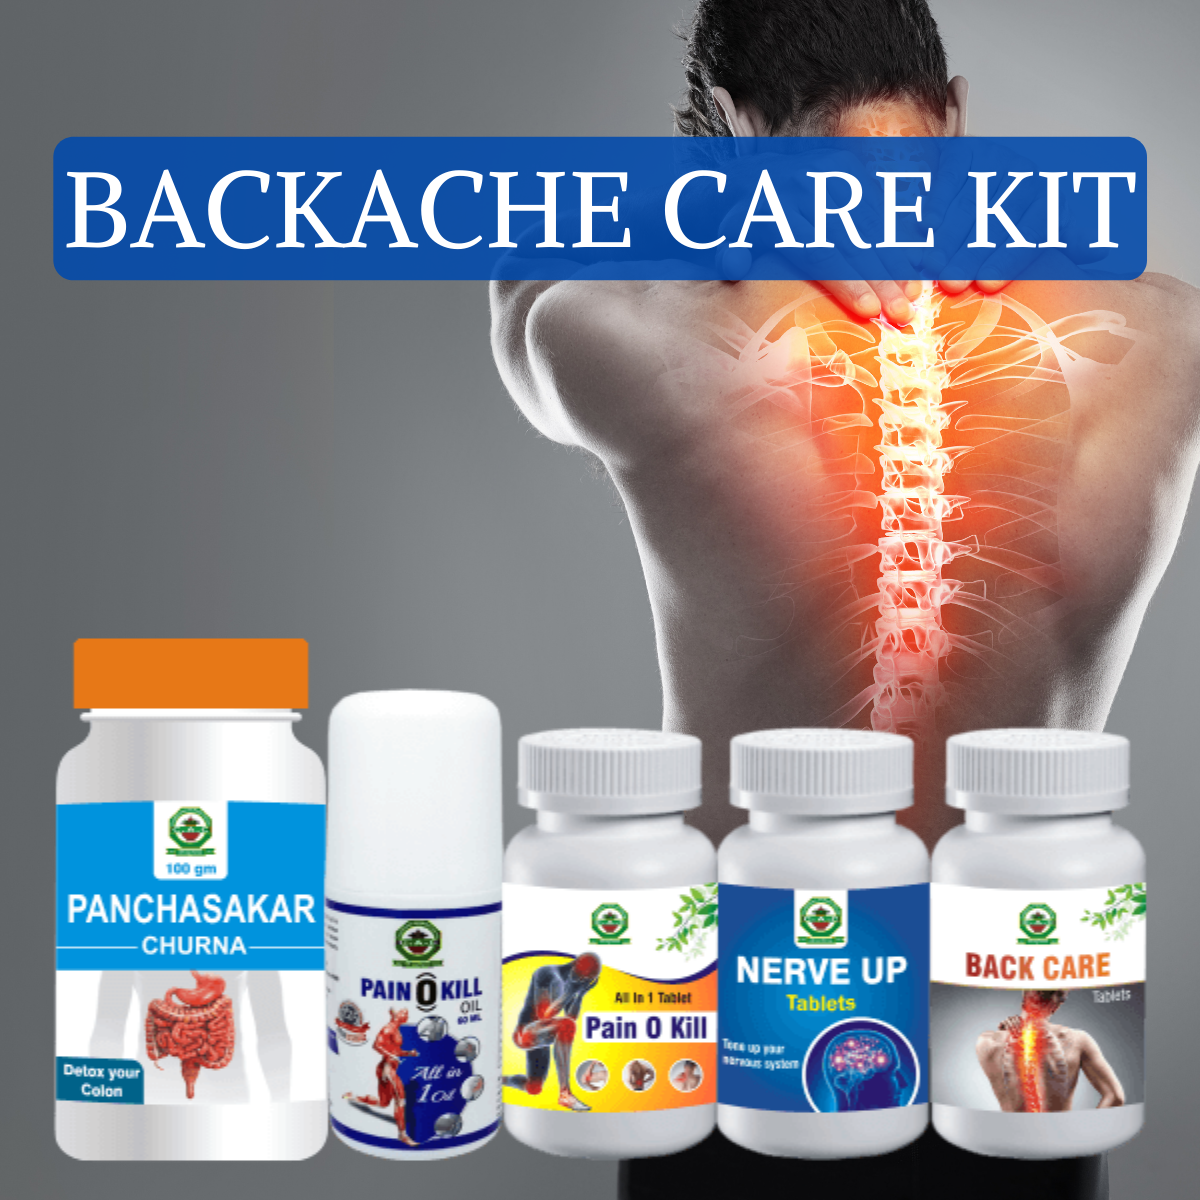 Backache Care Kit